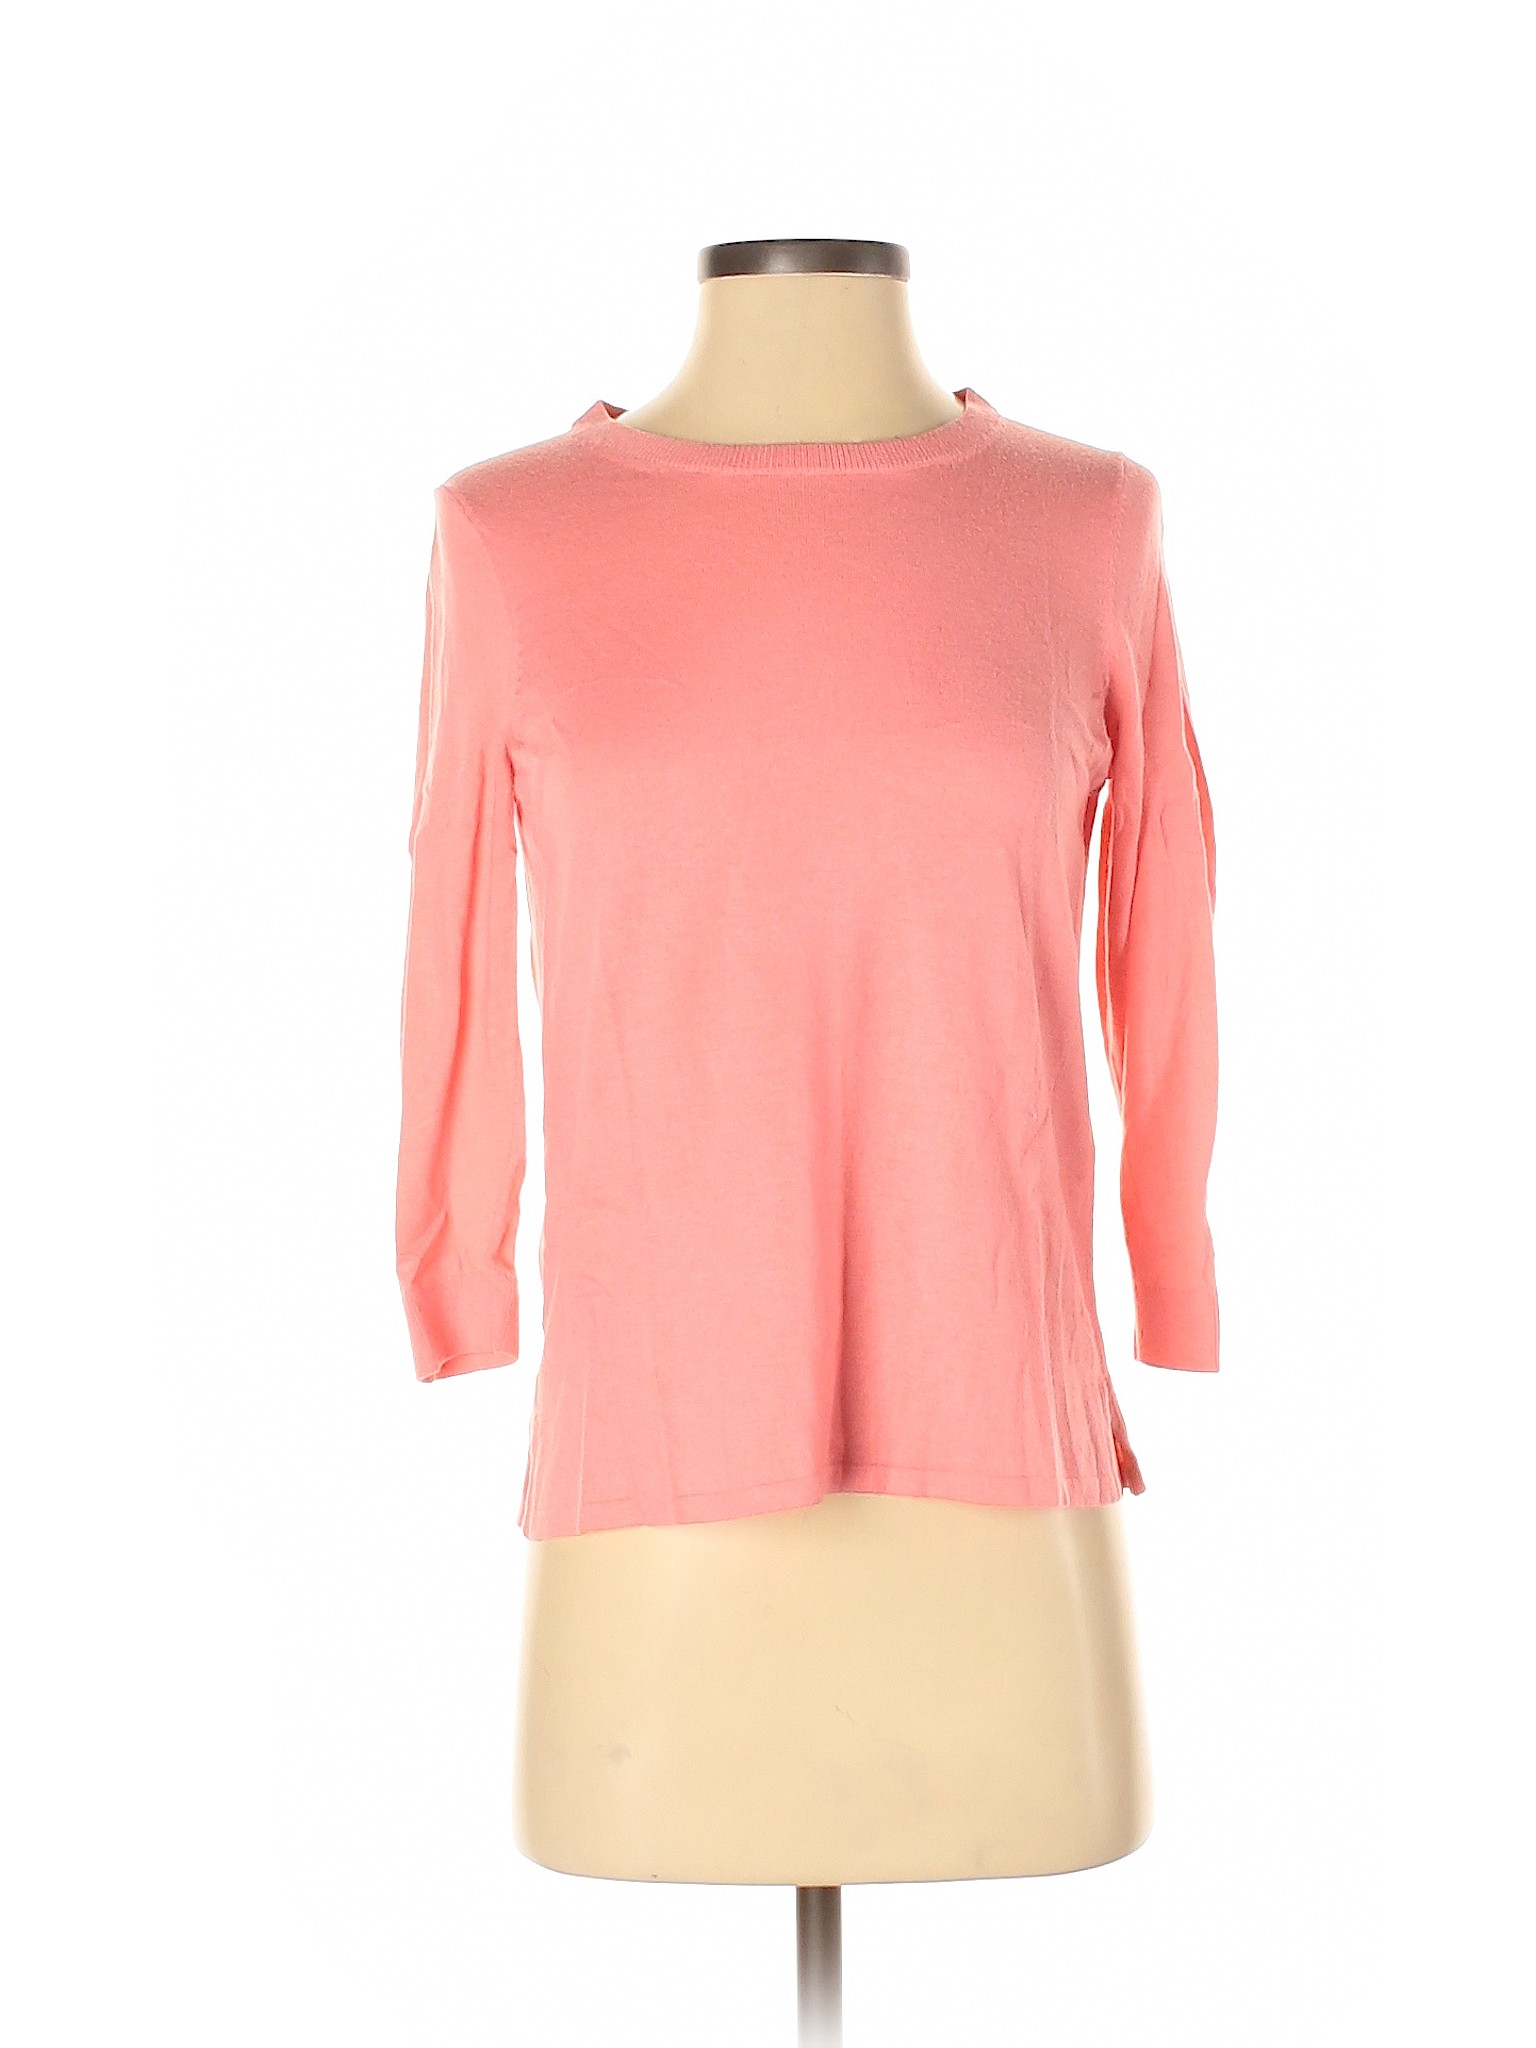 Ann Taylor Women Pink Pullover Sweater S | eBay